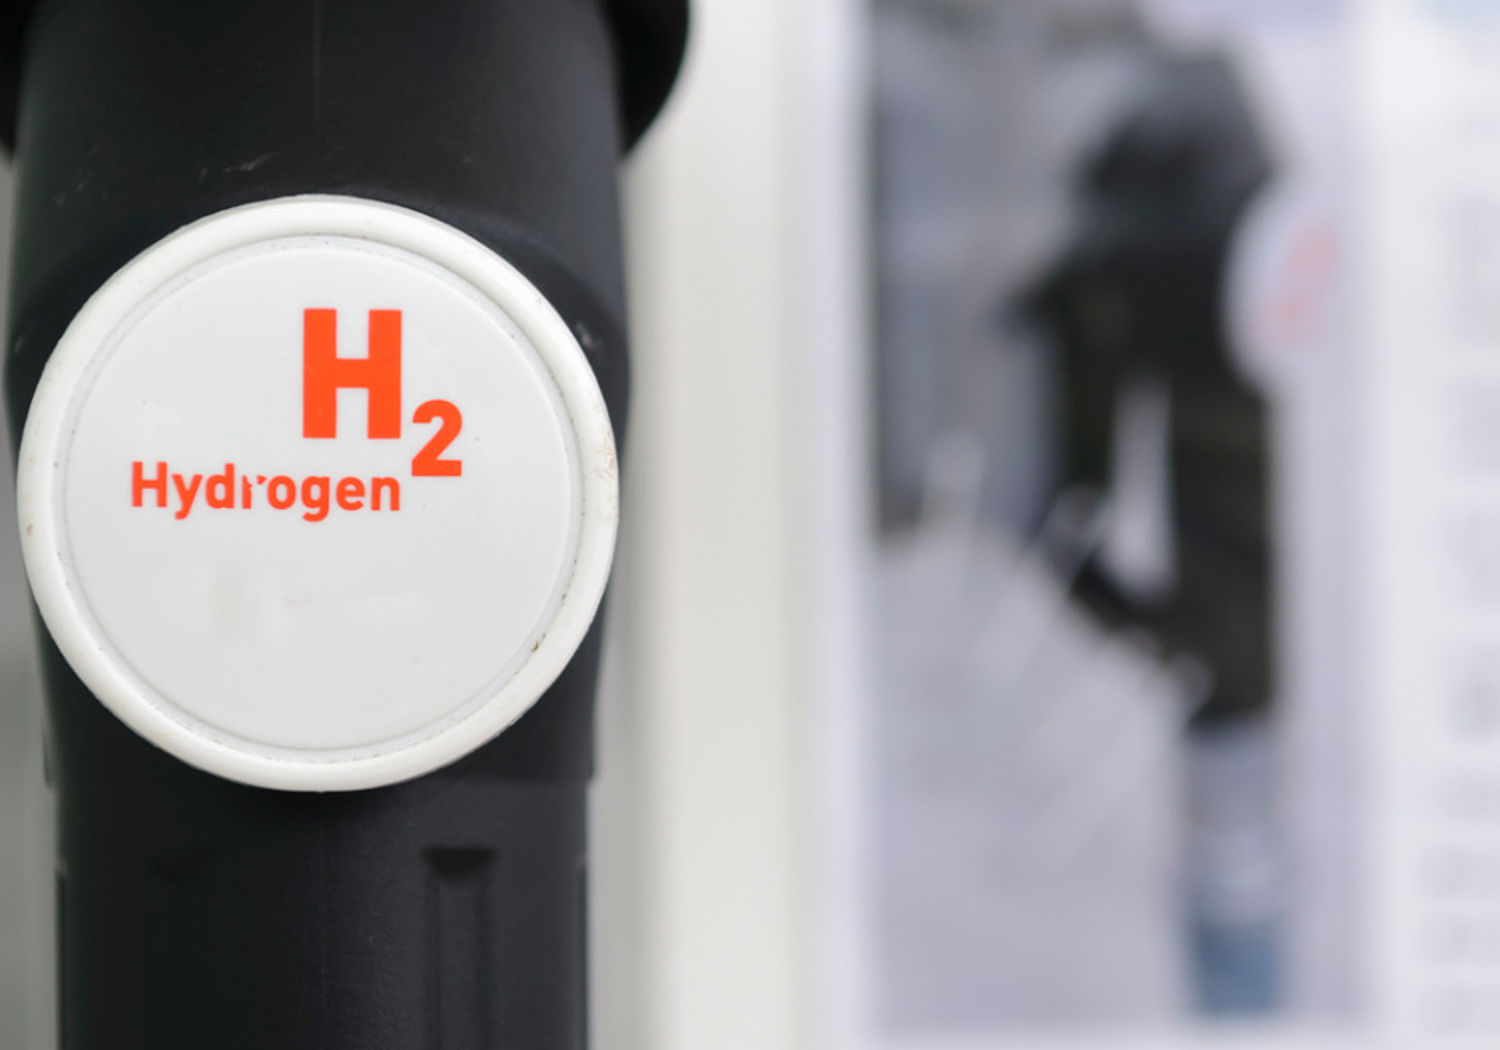 Image showing a closeup of a high pressure hydrogen fuel nozzle